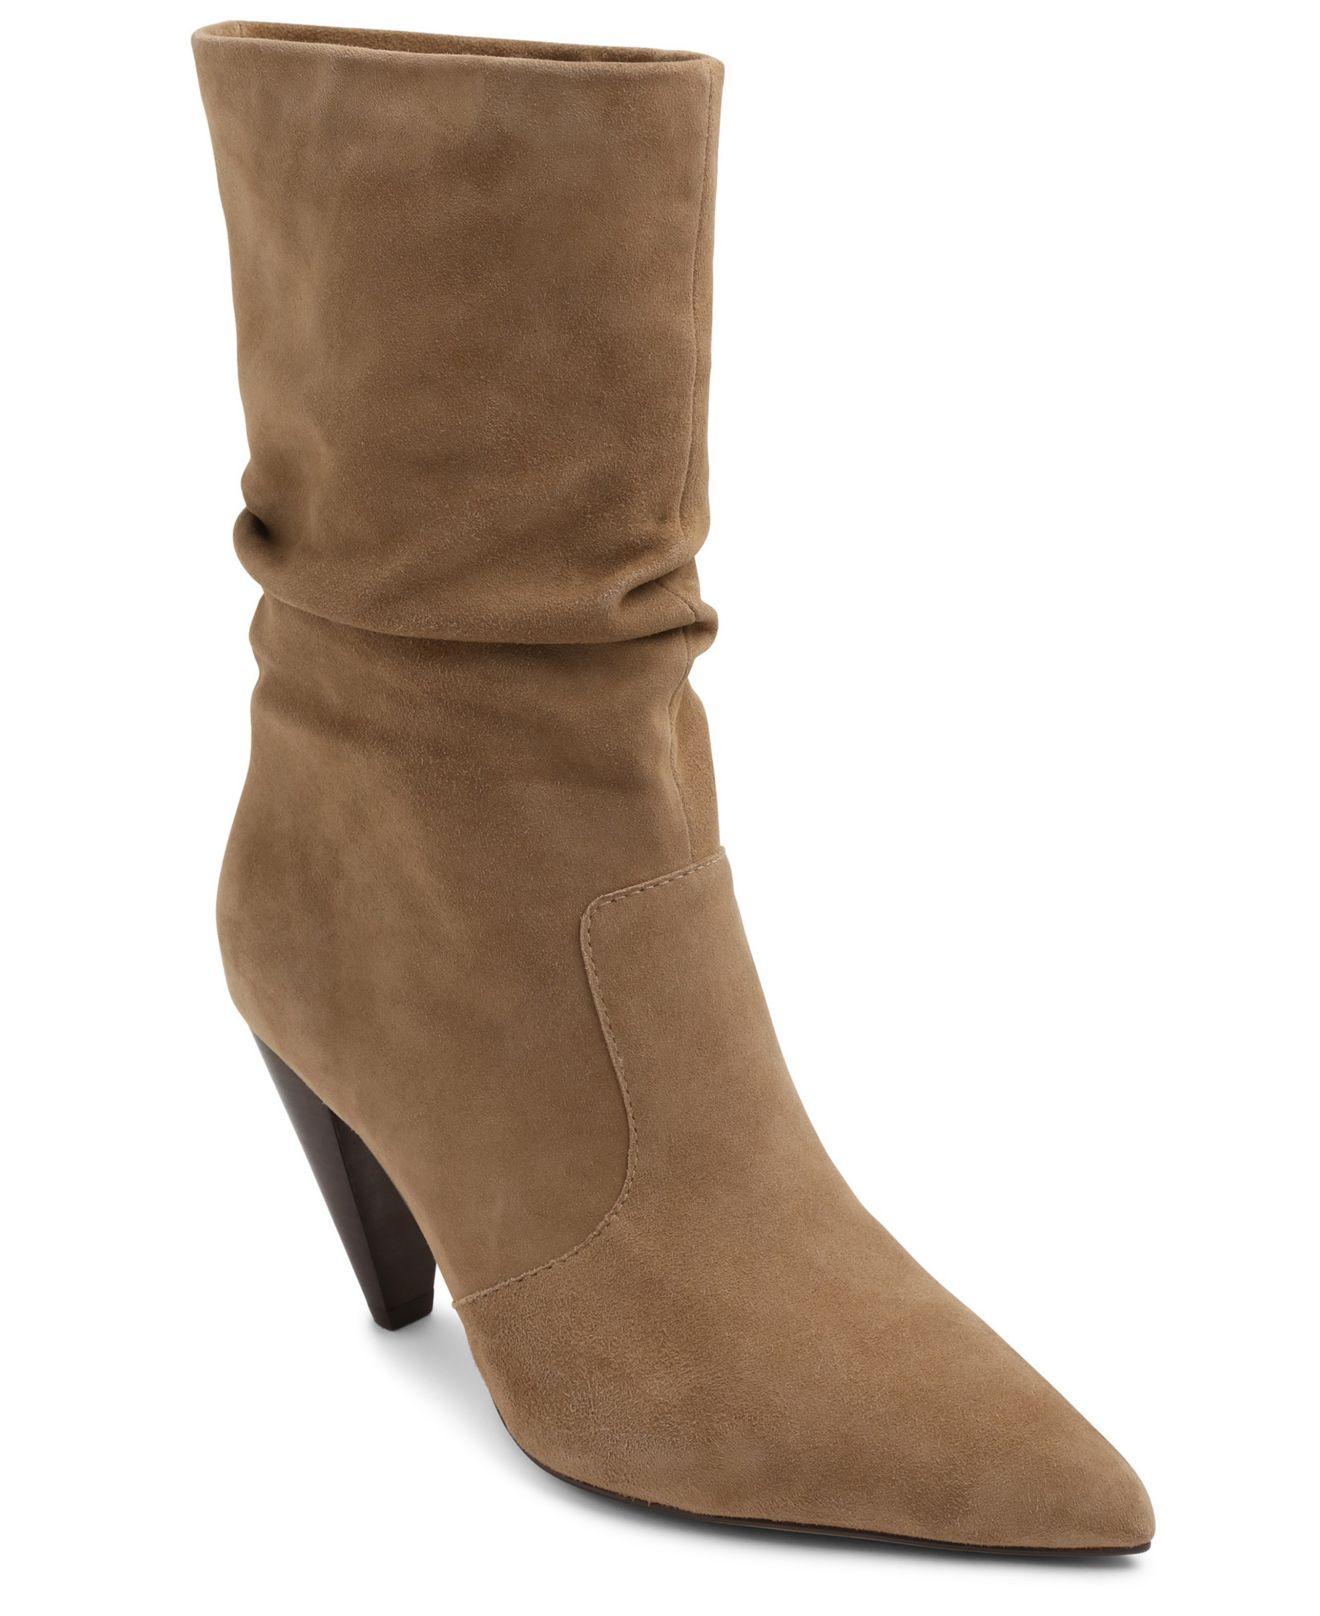 Kensie Suede Kenley Slouch Boots in Light Brown (Brown) - Lyst